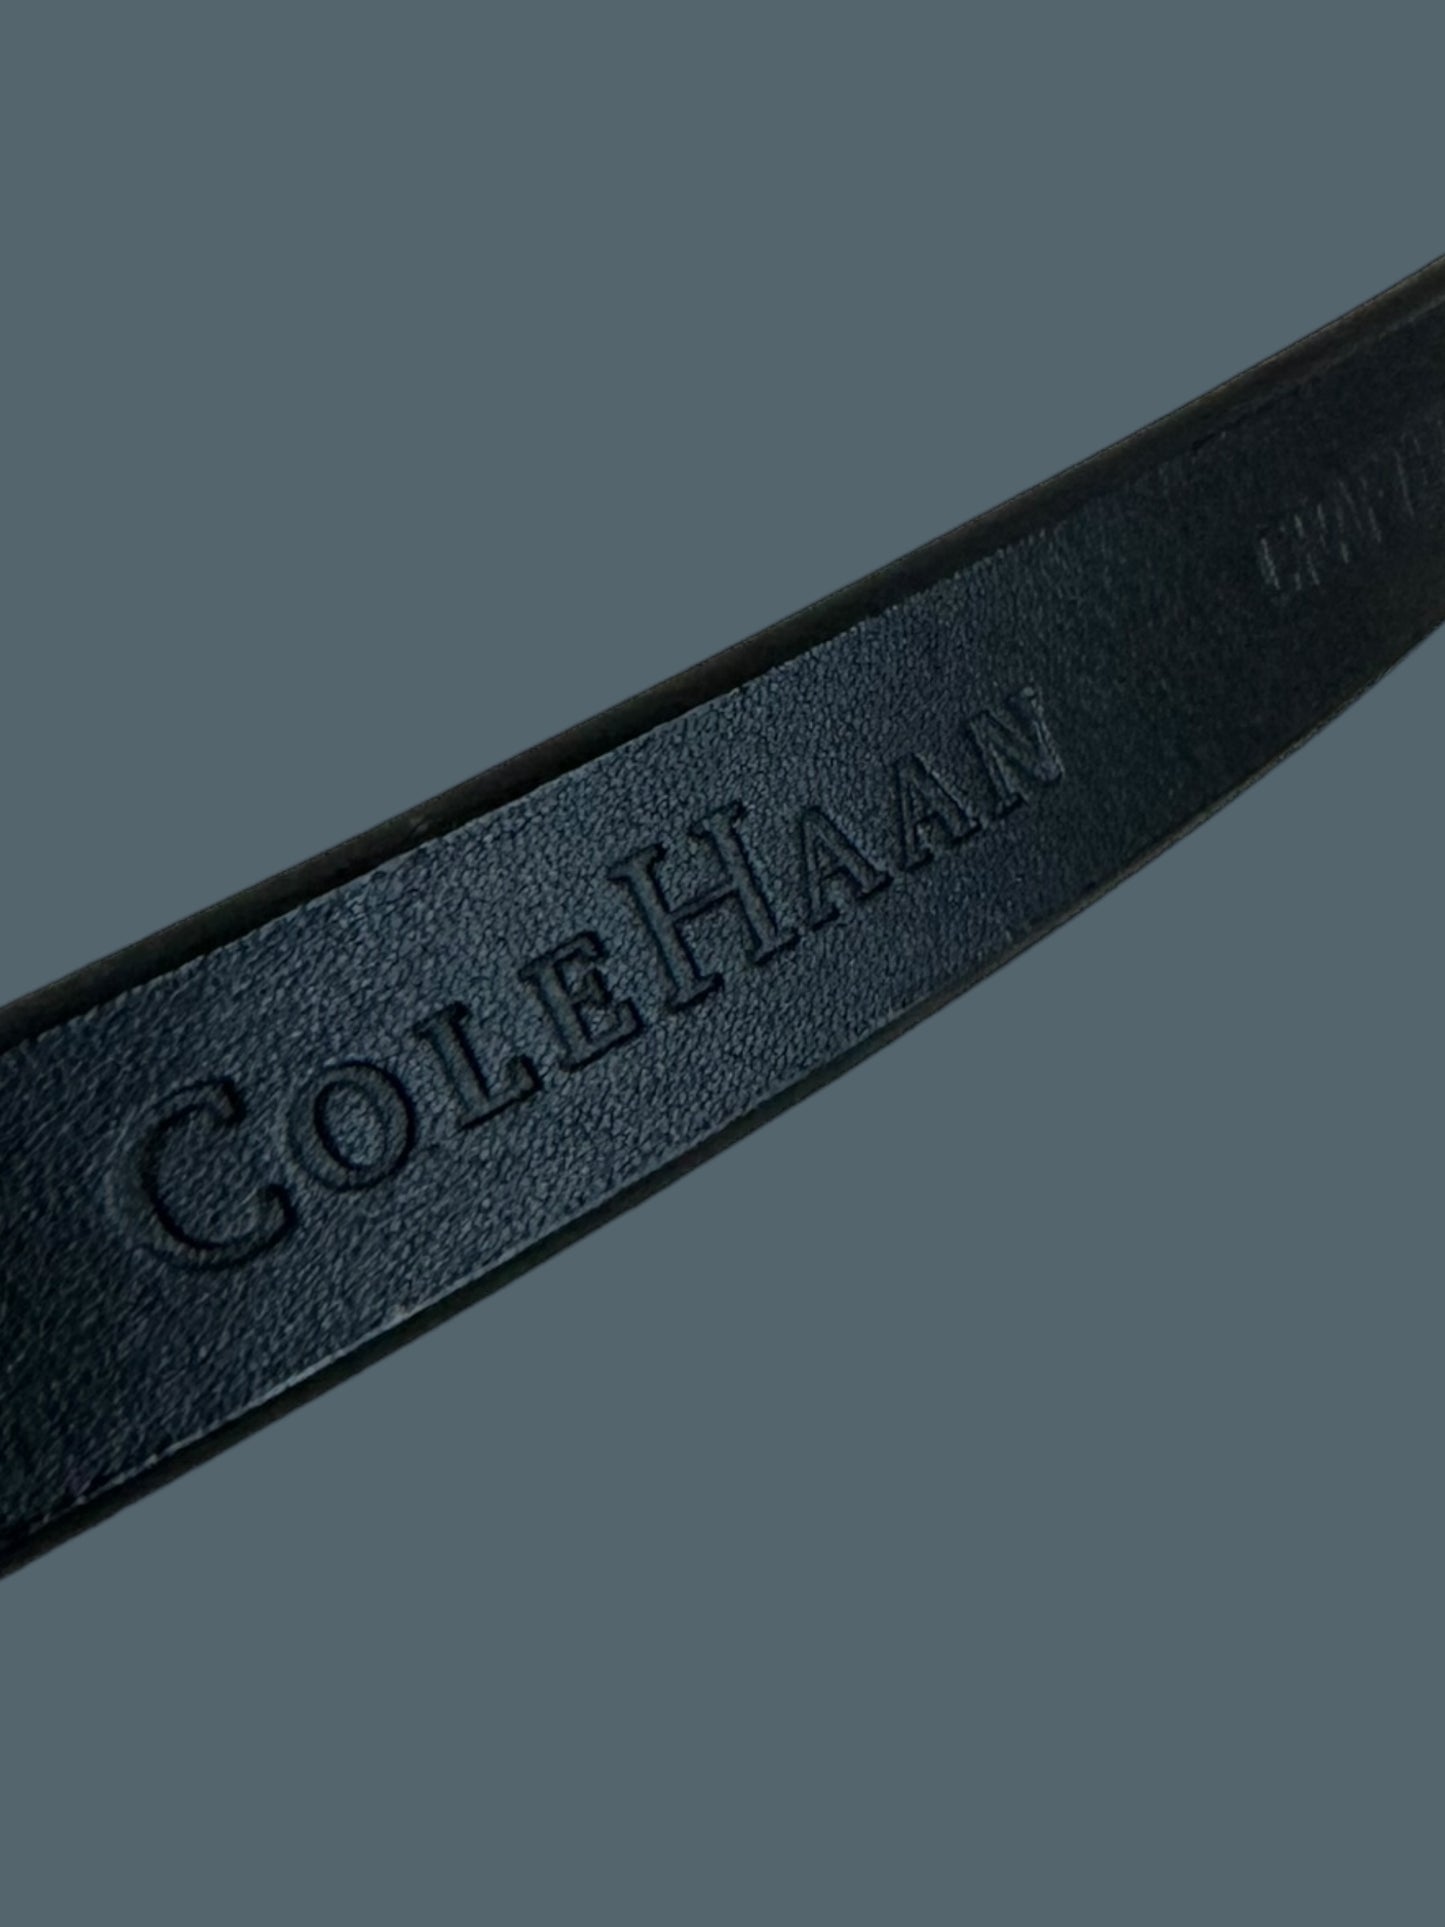 COLE HAAN skinny leather belt